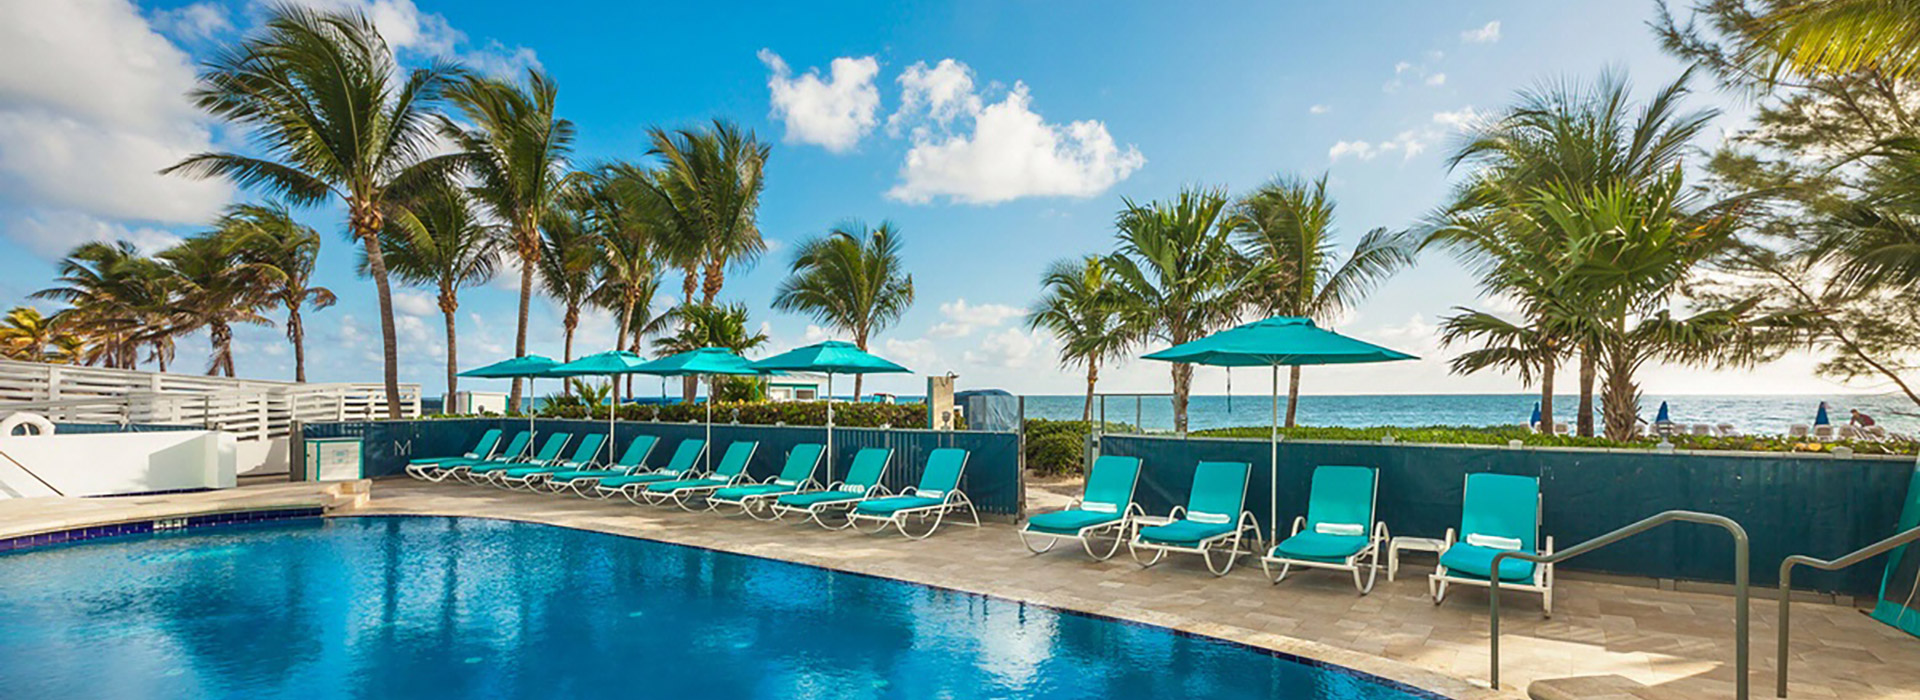 Marenas Beach Resort Miami Pool